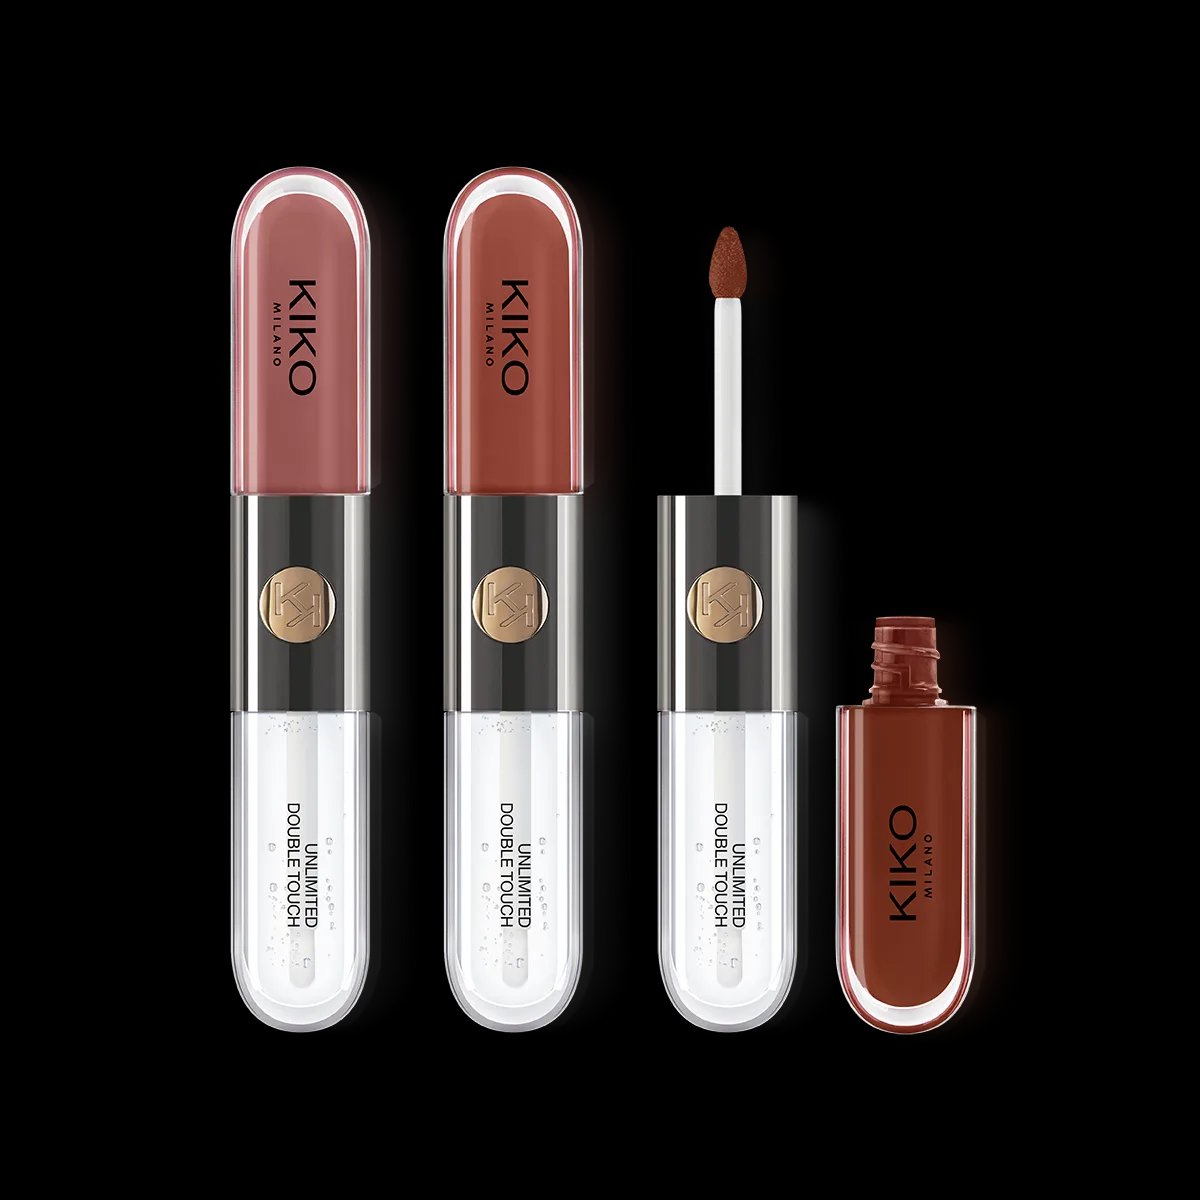 KIKO – Unlimited Double Touch Lipstick Kit à 30,99 € chez KIKO